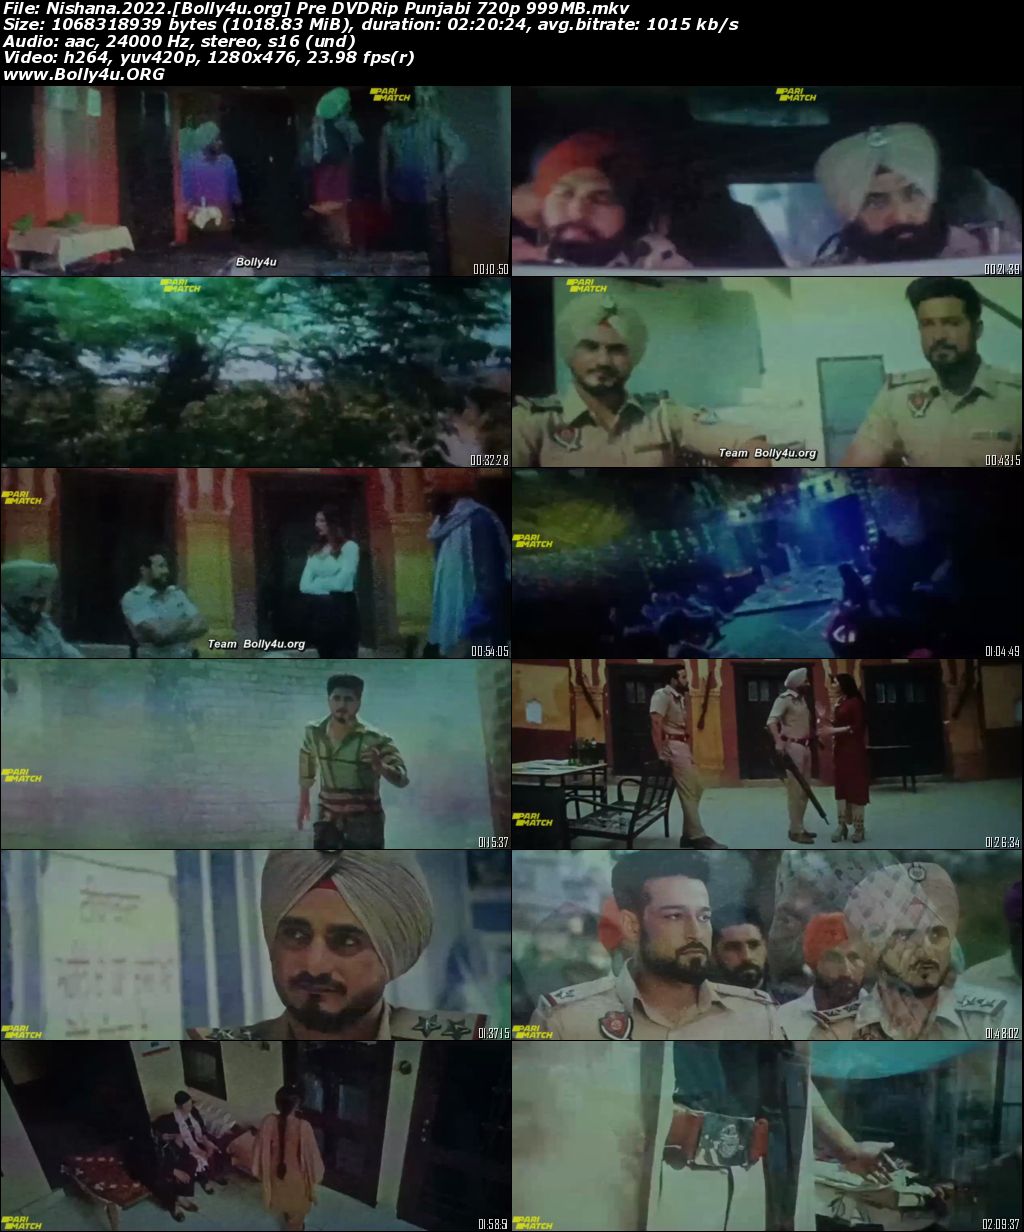 Nishana 2022 Pre DVDRip Punjabi Full Movie Download 720p 480p